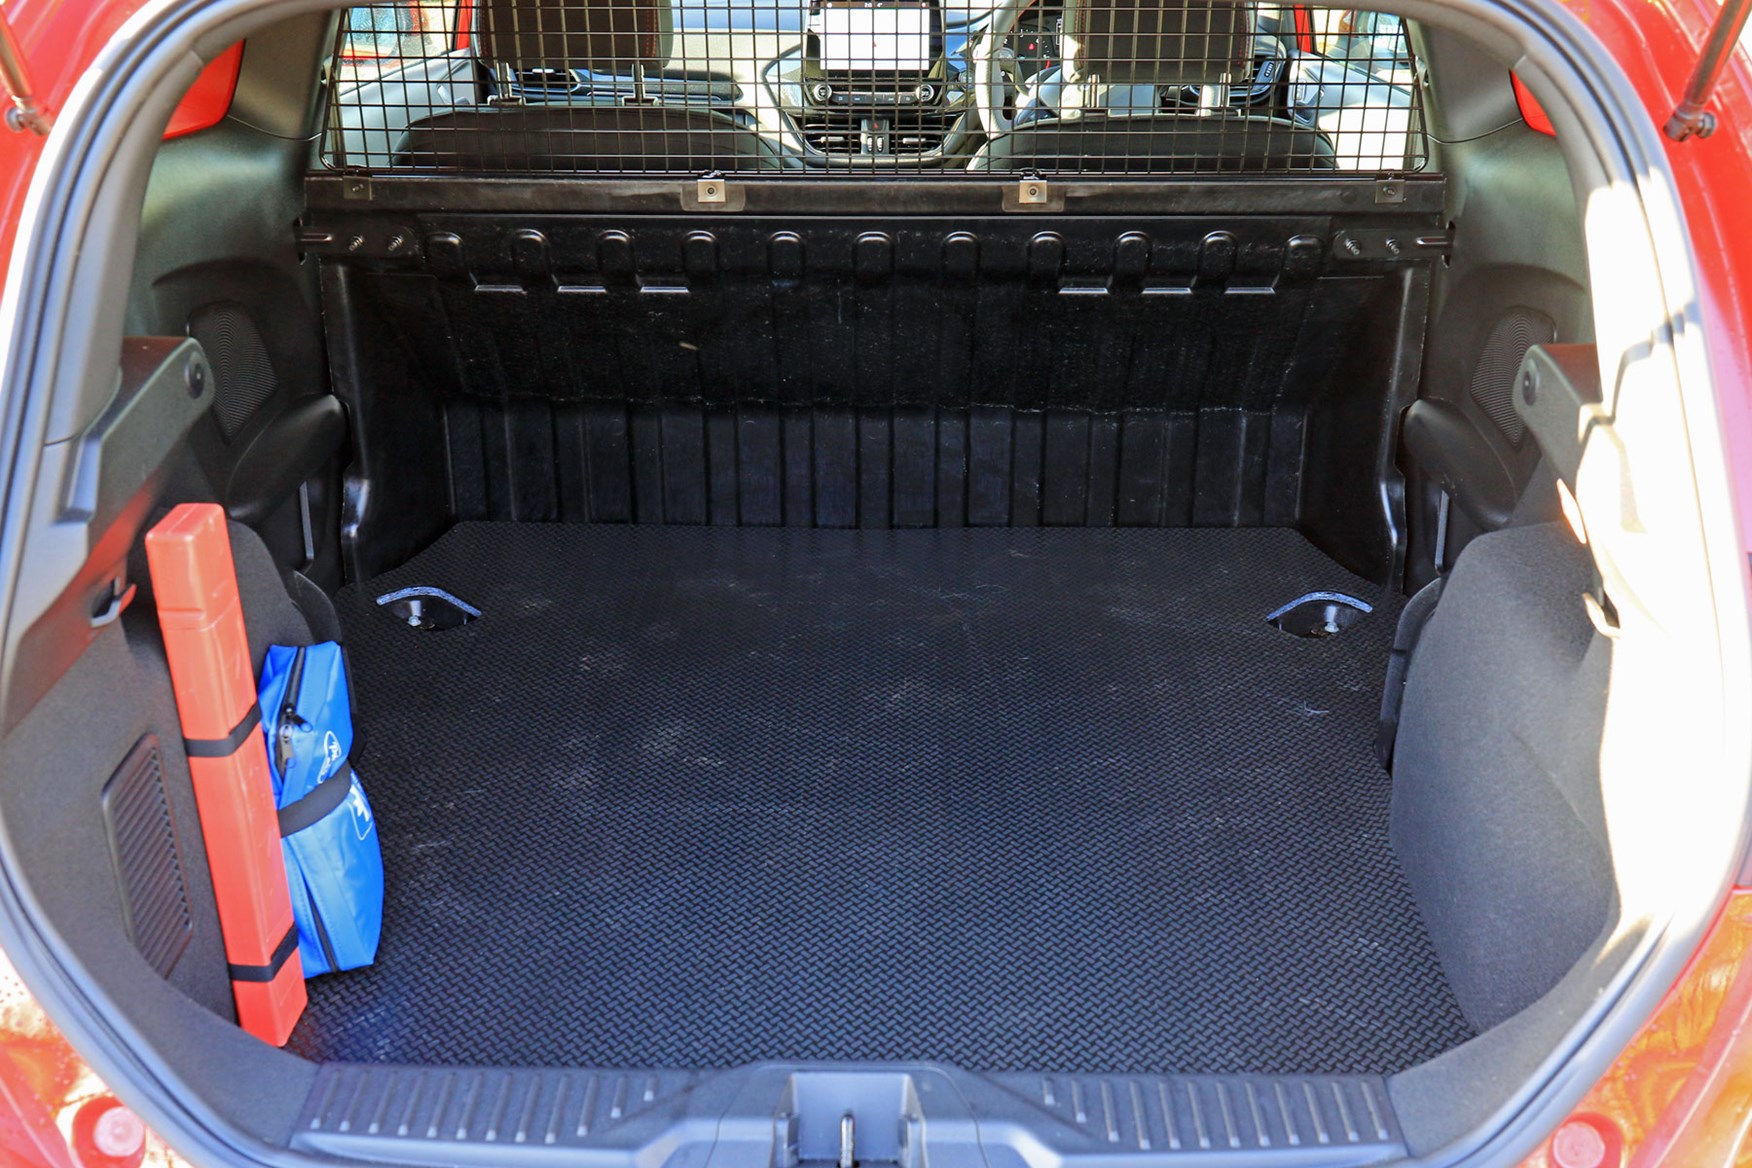 Ford Fiesta Sport Van dimensions - load area